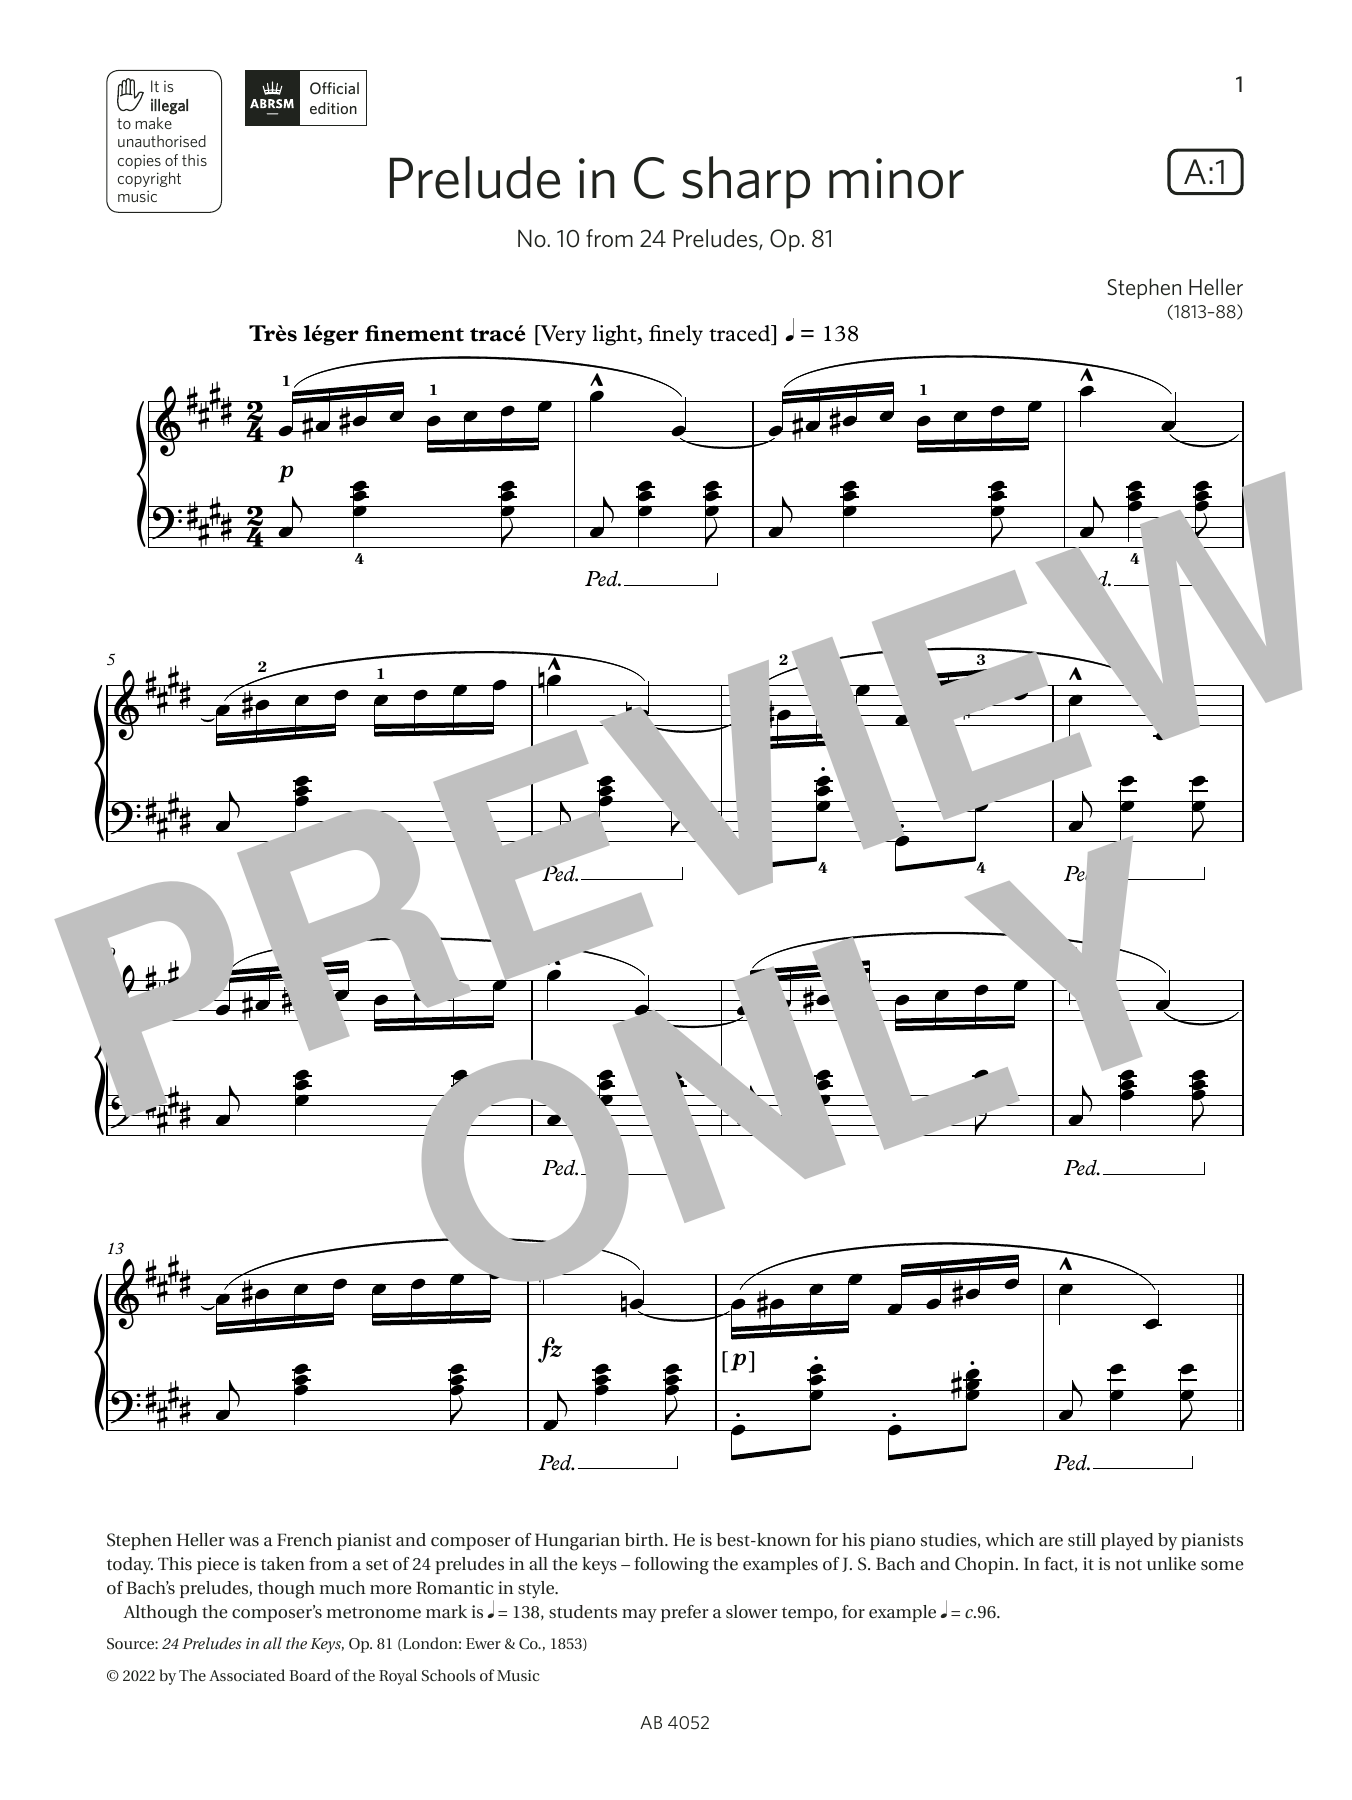 Download Stephen Heller Prelude in C sharp minor (Grade 6, list Sheet Music